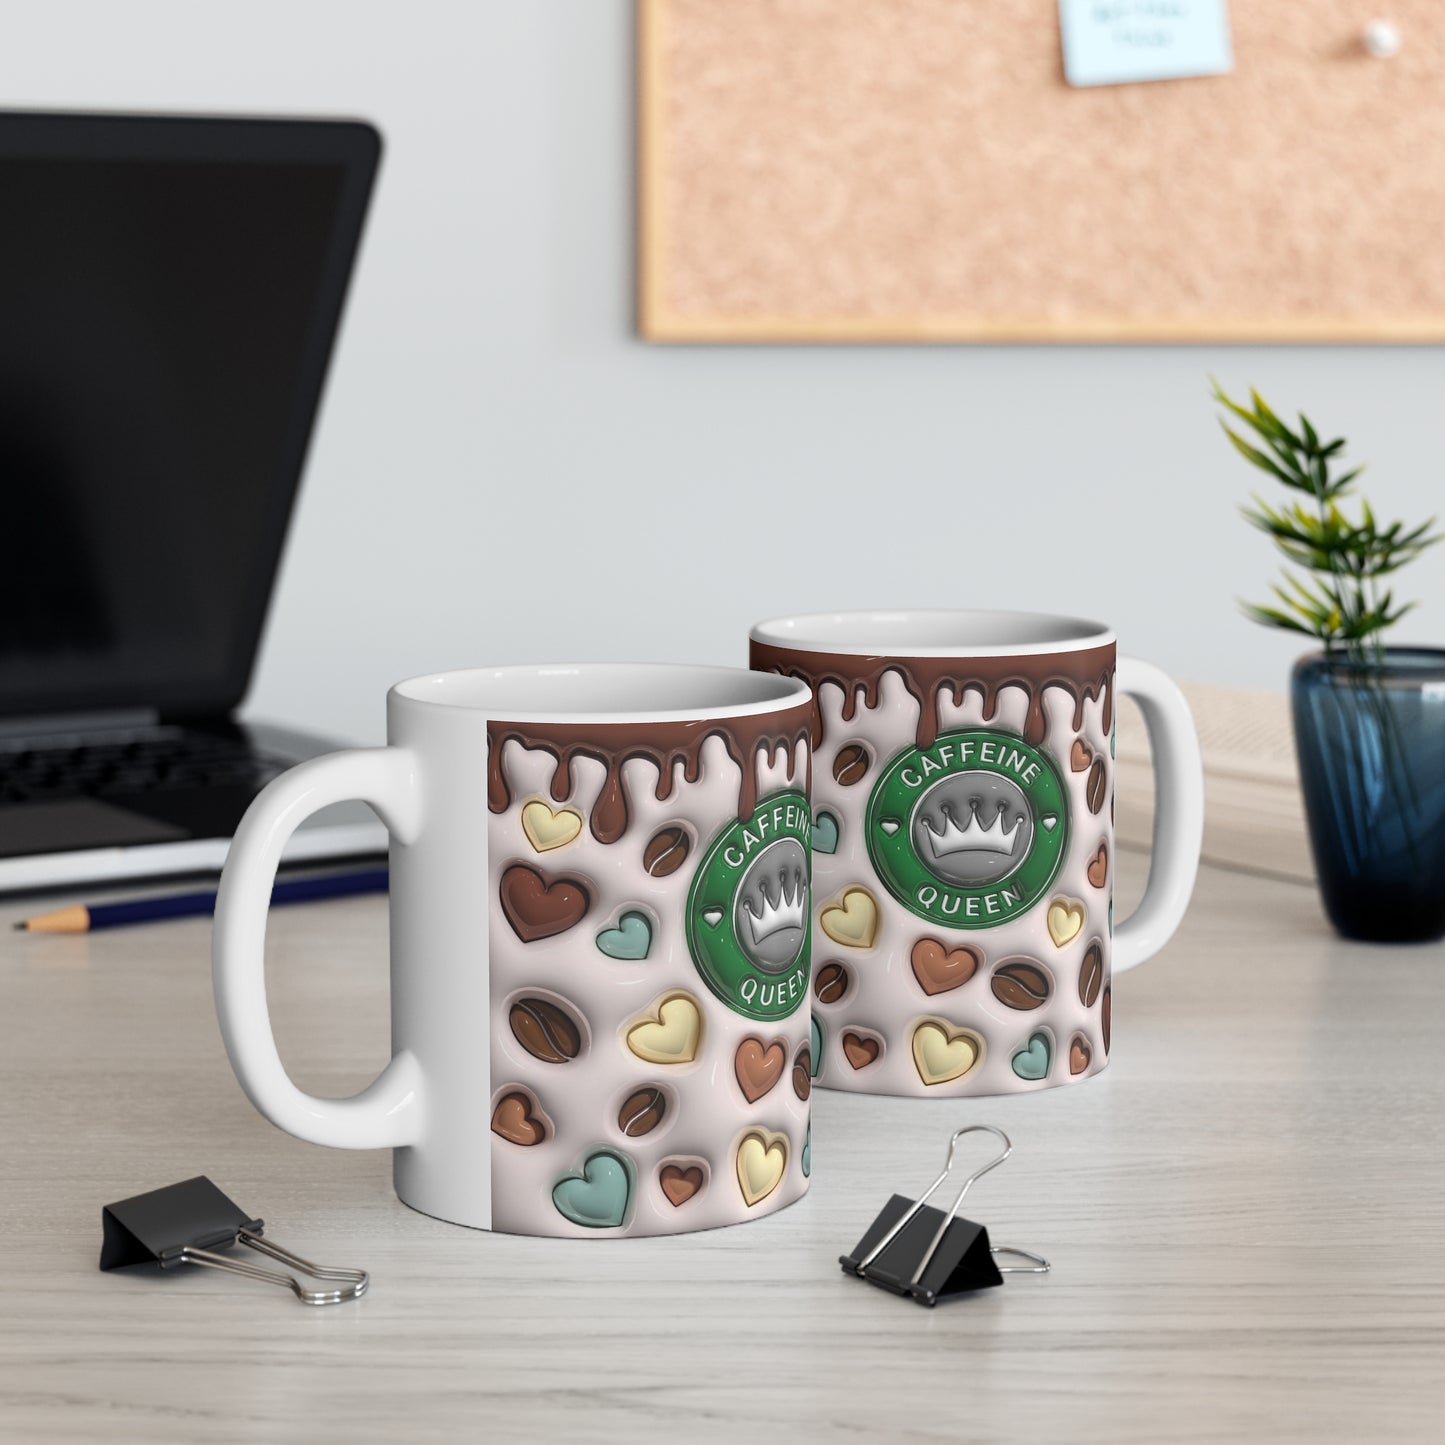 THE CAFFEINE QUEEN MUG 11. ONZ - The Perfect Mug for Coffee Lovers - MUGSCITY - Free Shipping